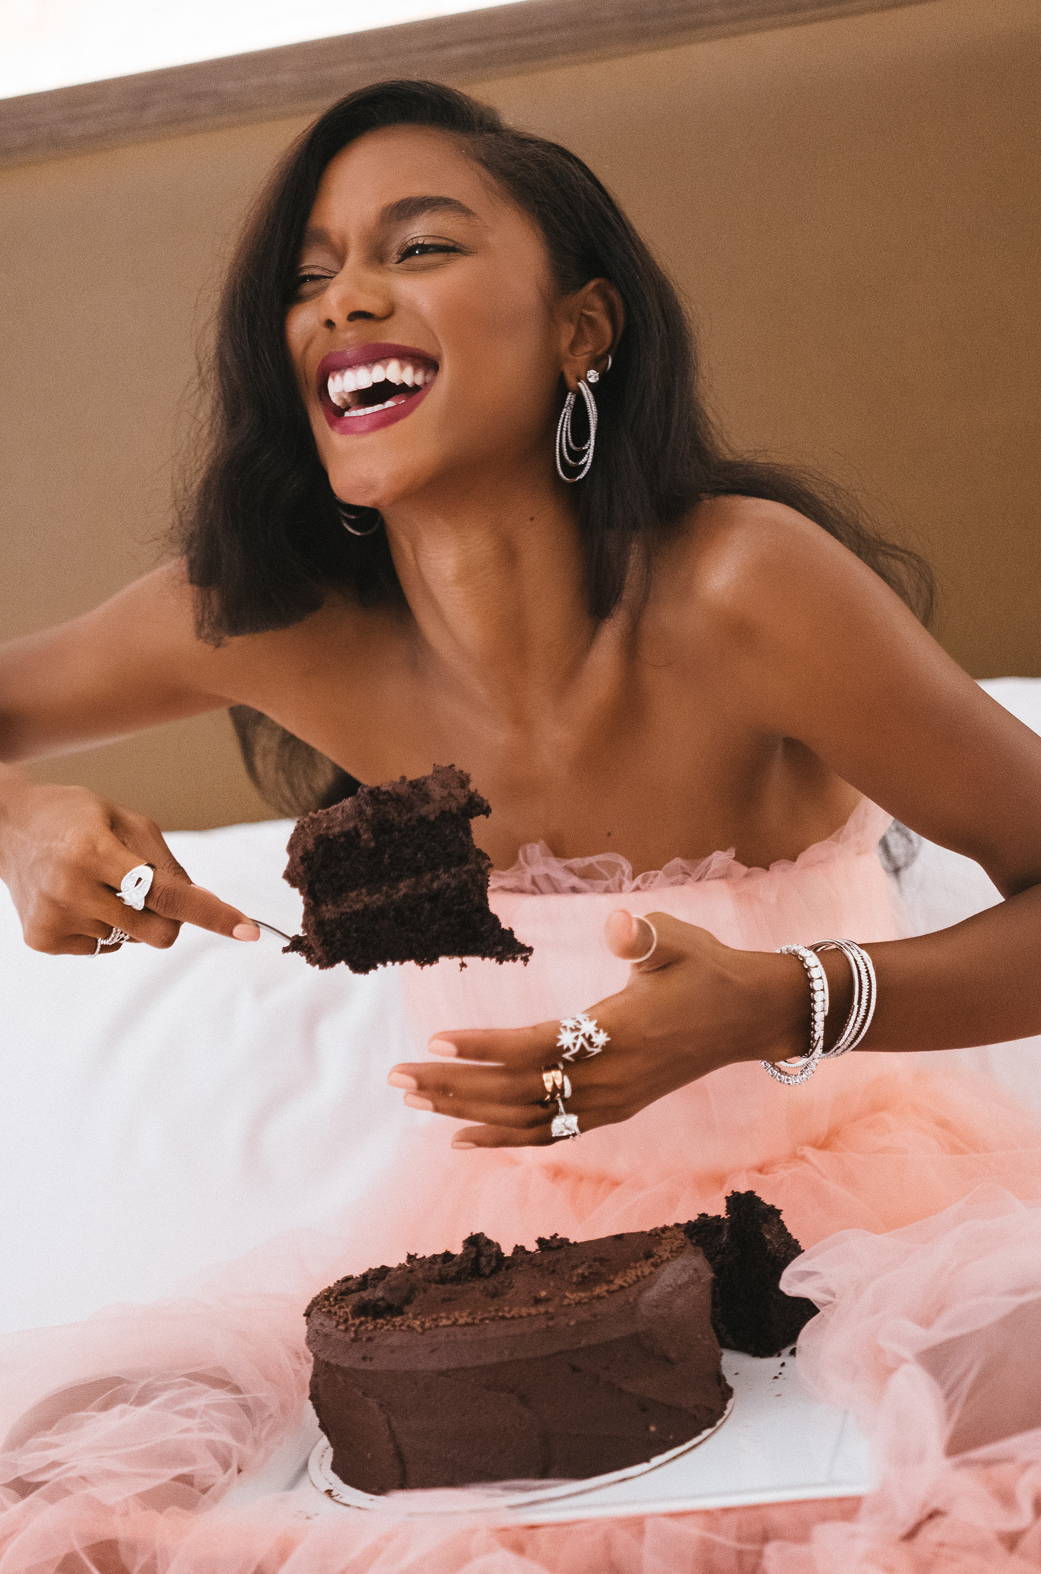 Model wearing Ring Concierge jewelry eating cake